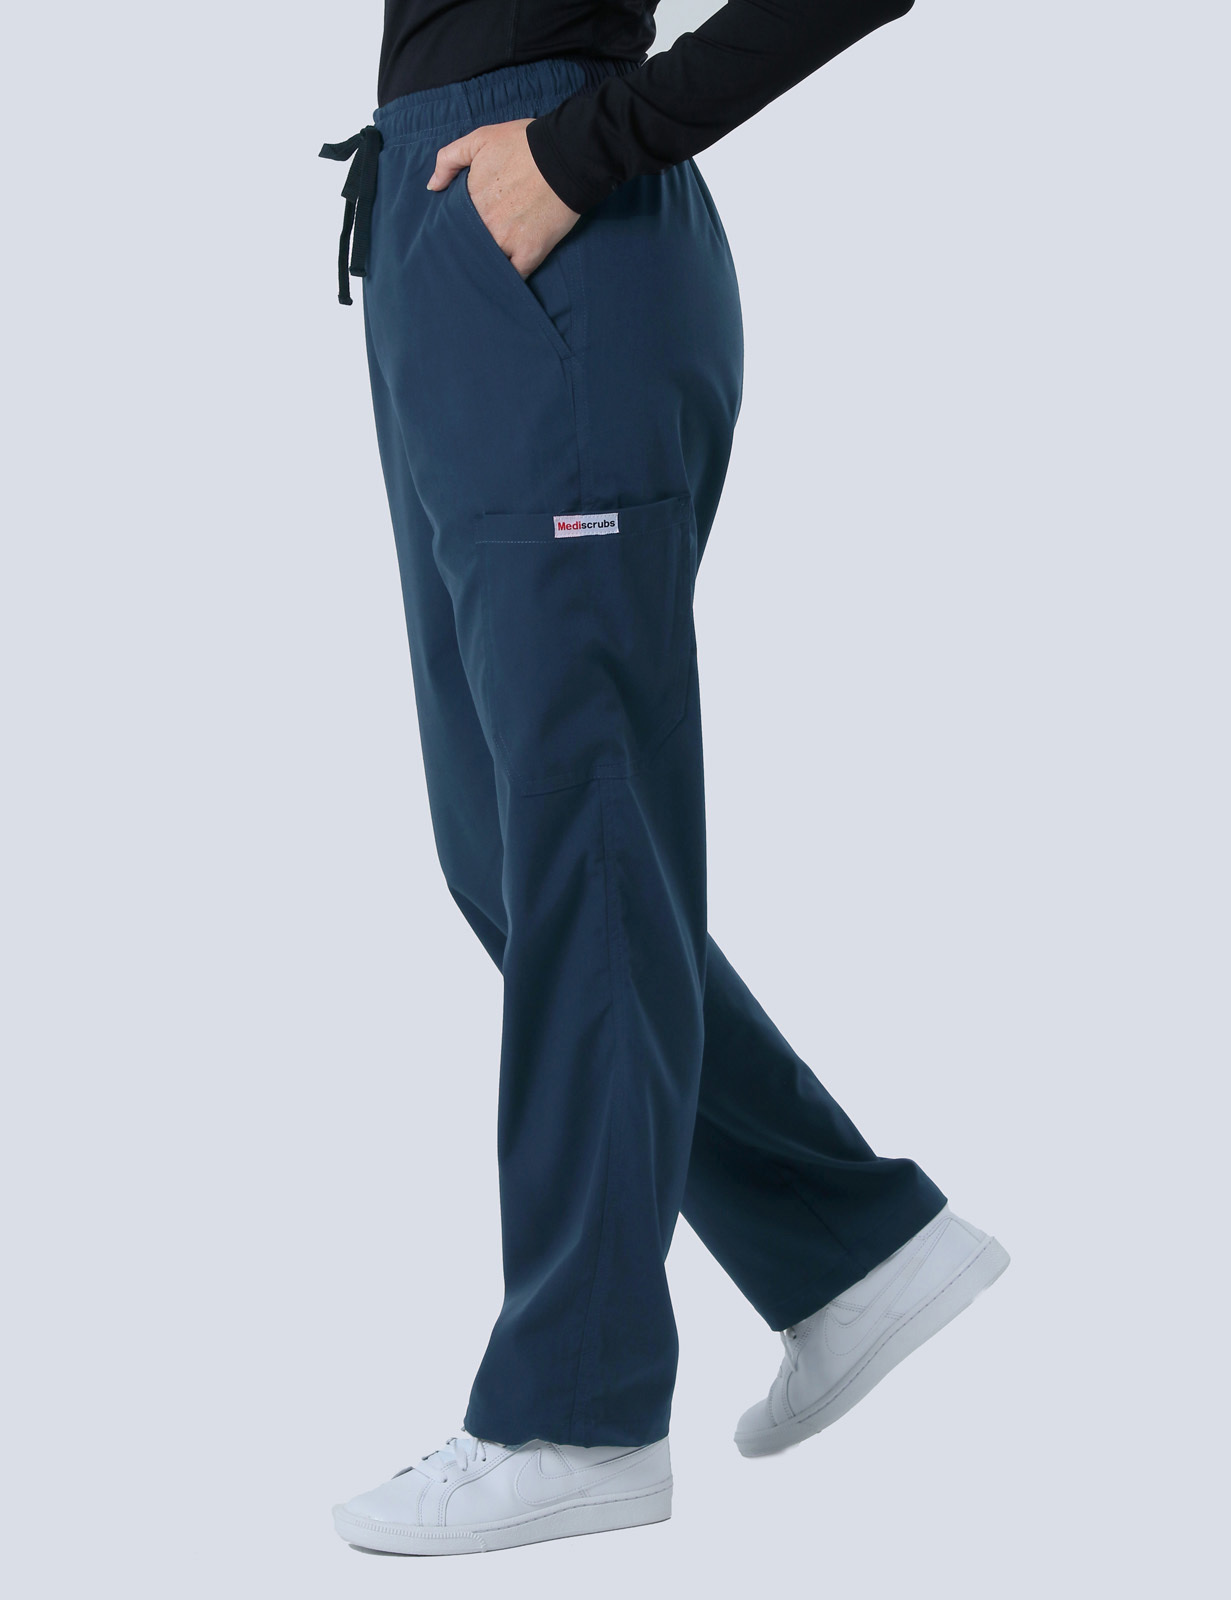 Peninsula Health - ESW/SSSU ANUM (4 Pocket Scrub Top and Cargo Pants in Navy incl Logos)